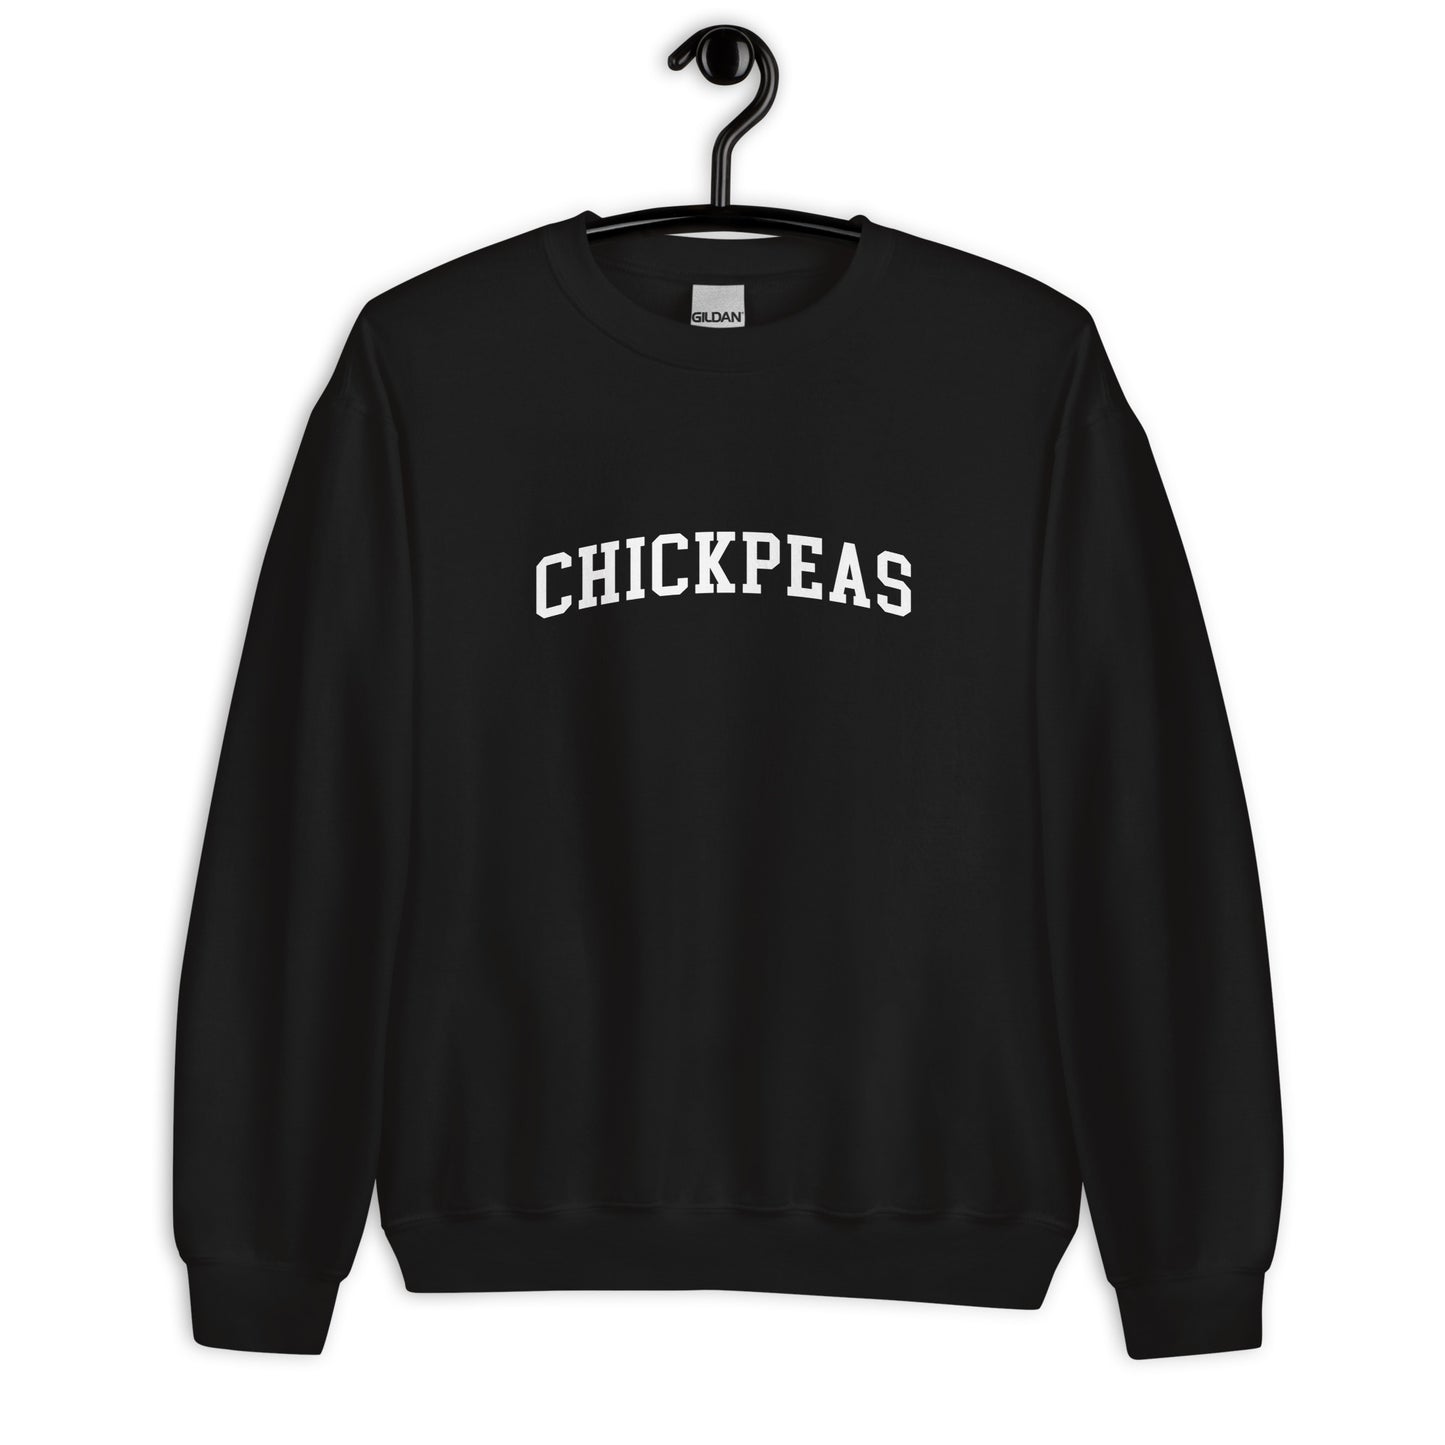 Chickpeas Sweatshirt - Arched Font